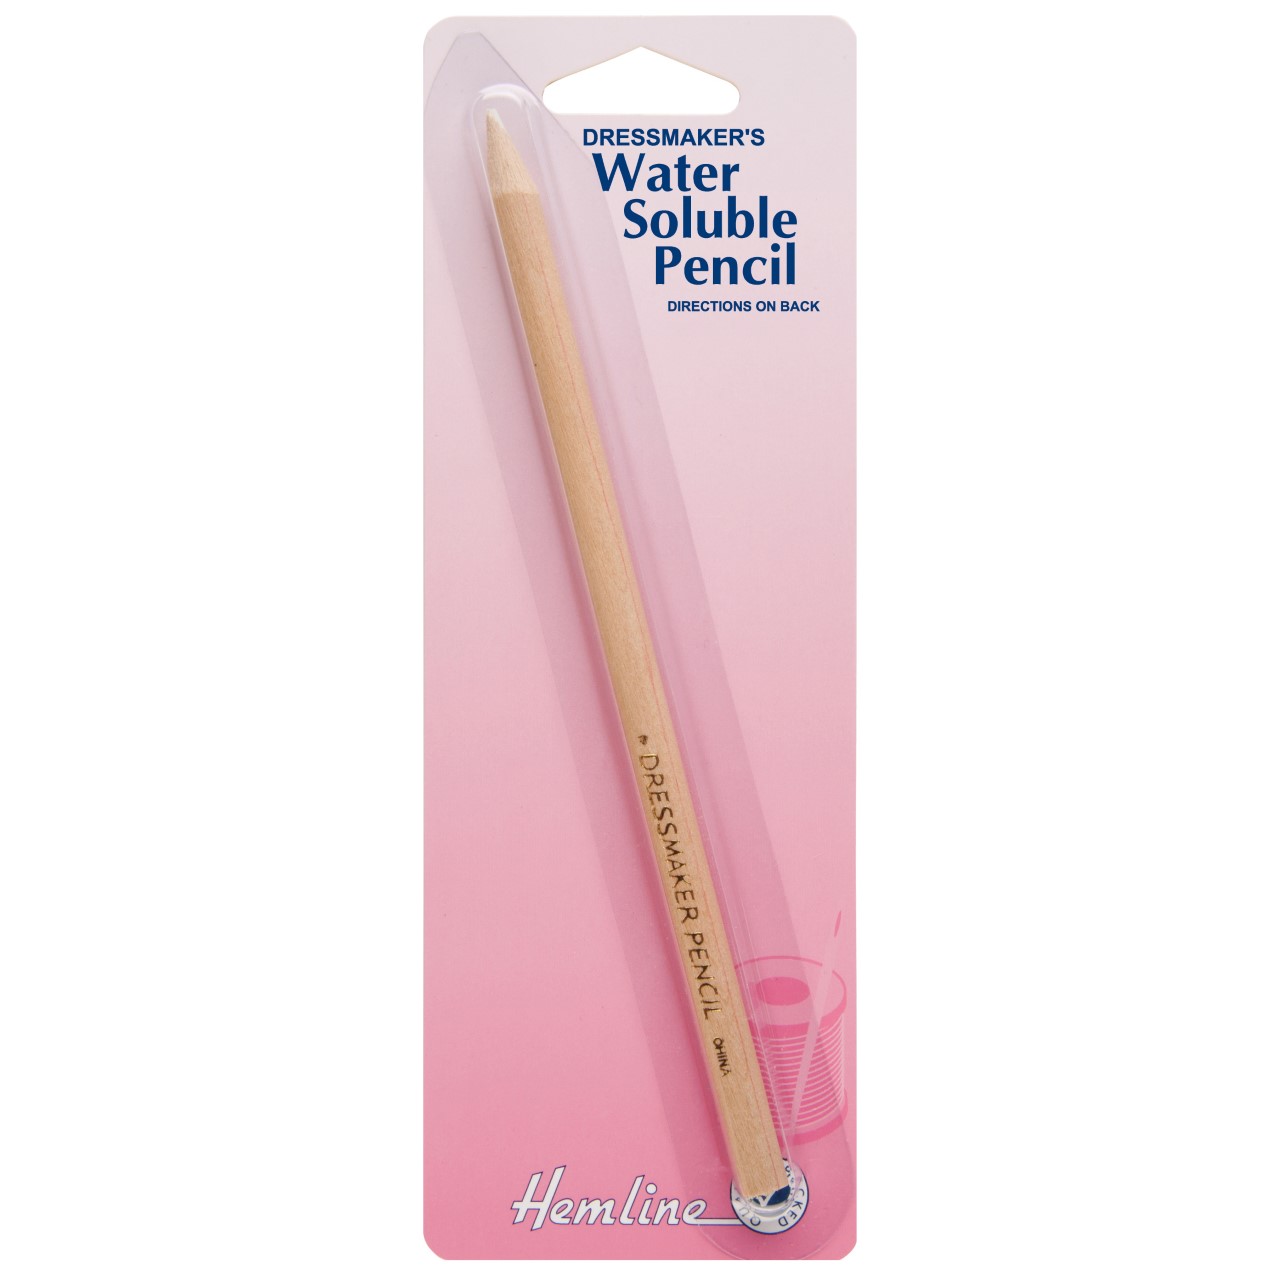 Hemline Water-Soluble Pencil in White